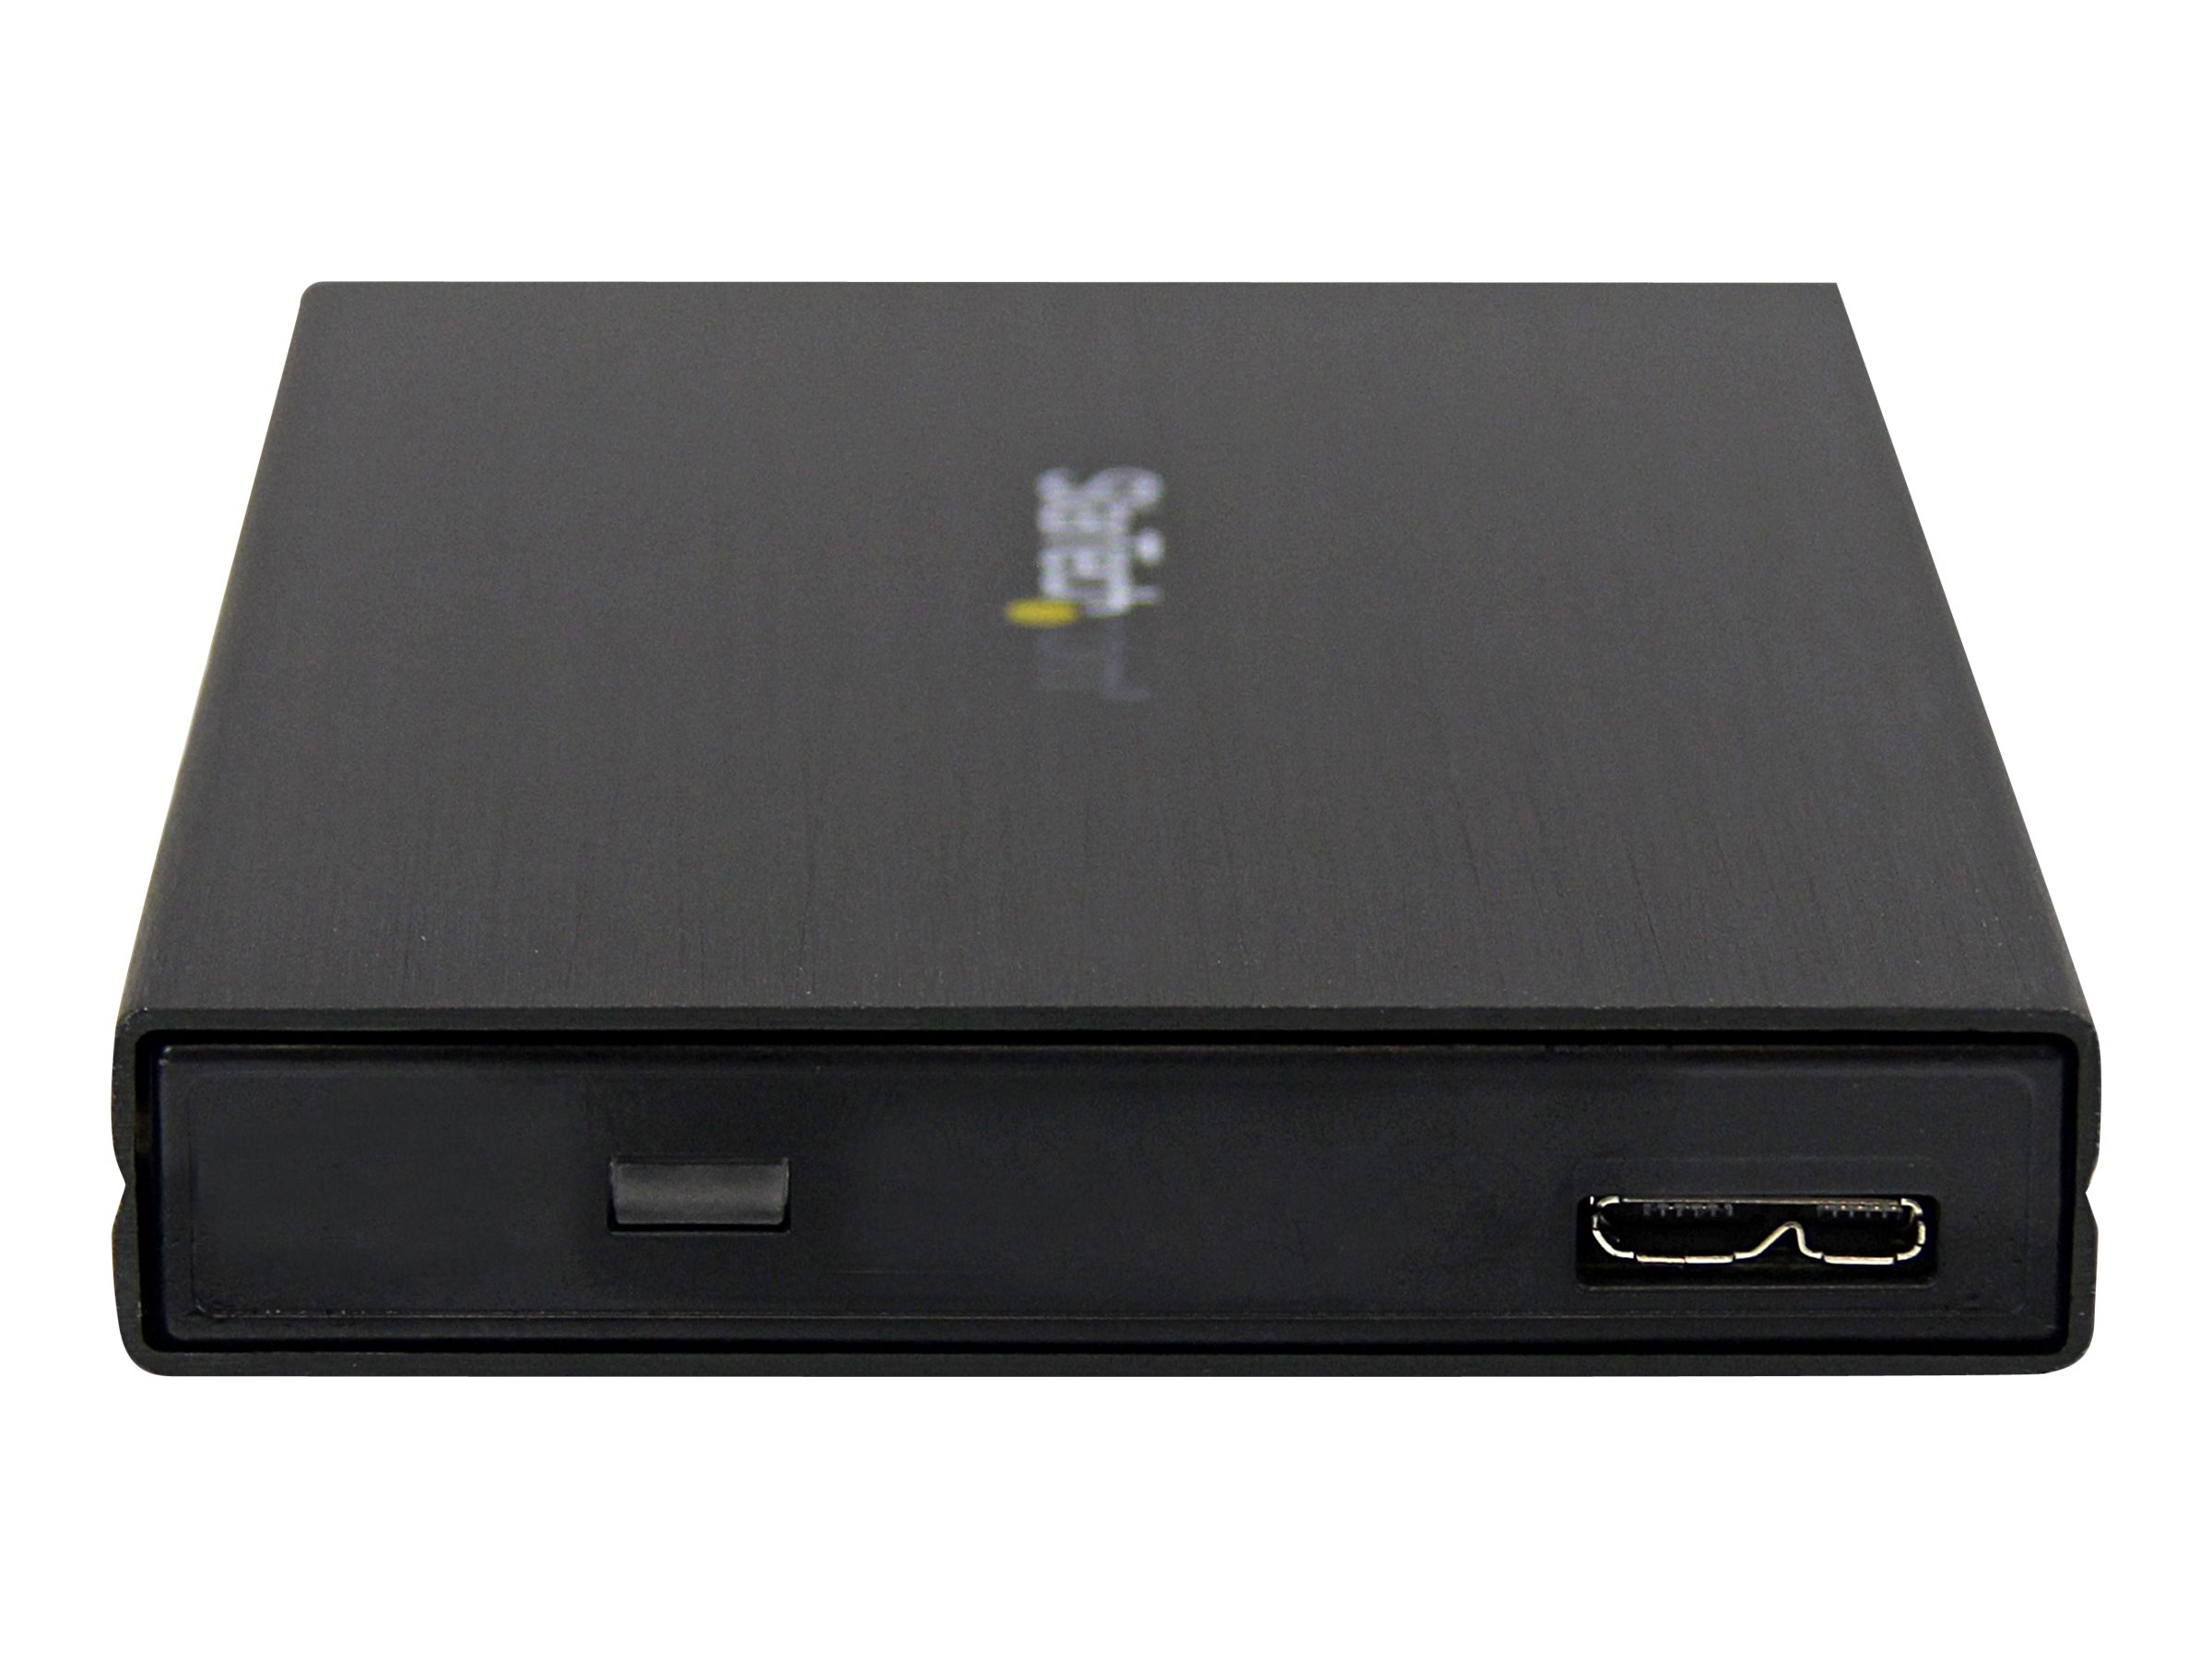 StarTech.com Externes 2,5 SATA III 6 GB/s SSD USB 3.0 SuperSpeed Festplattengehäuse mit UASP - 2,5 Zoll (6,4cm) HDD Gehäuse aus Aluminium - Speichergehäuse - SATA 6Gb/s - USB 3.0